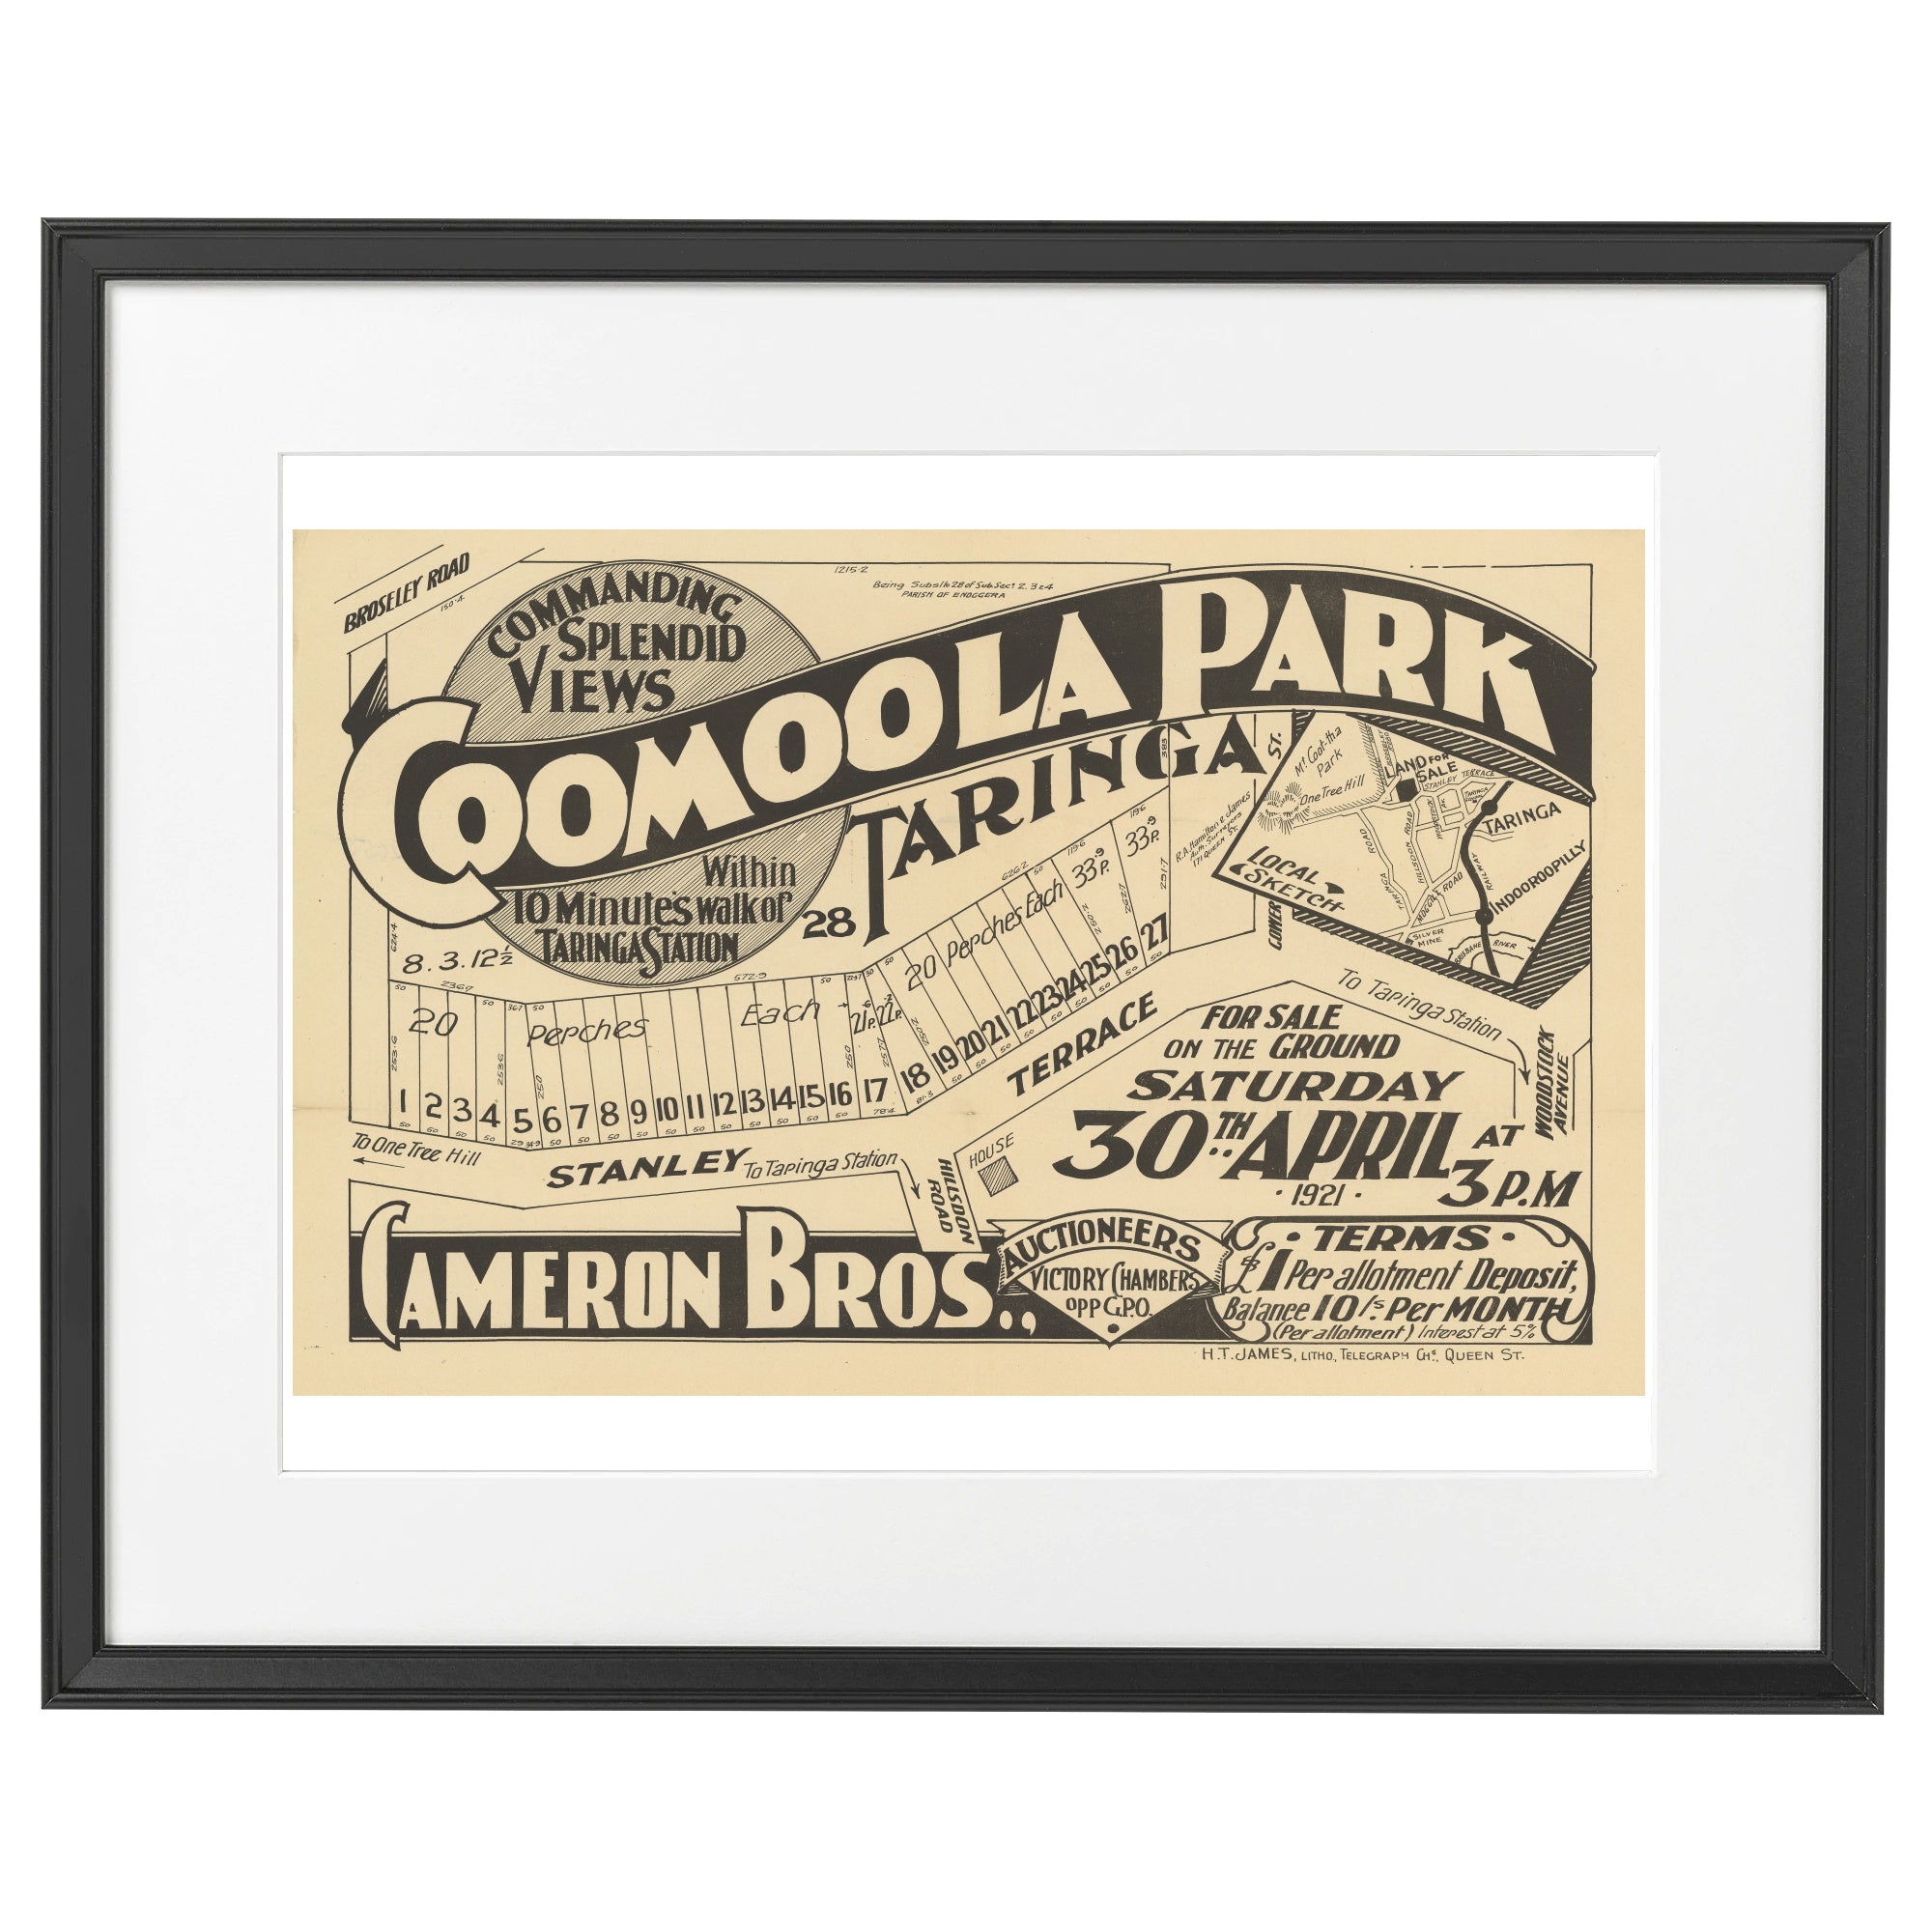 1921 Taringa - Coomoola Park - 99 years old today